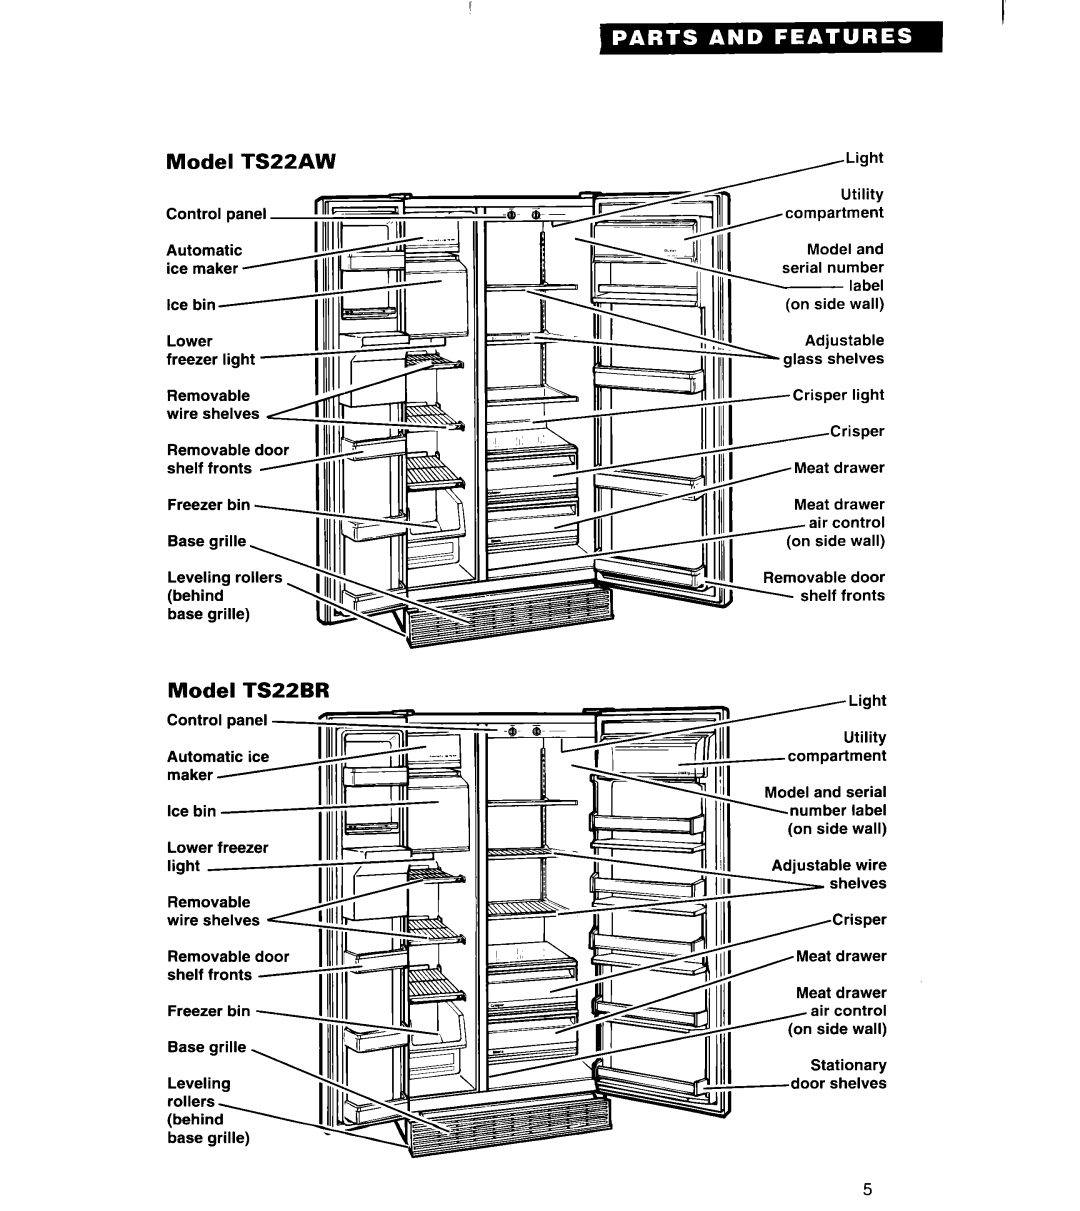 Whirlpool Model TS22AW, Model TS22BR, I, Lower freezer, Removable door, Meat drawer, door shelves 